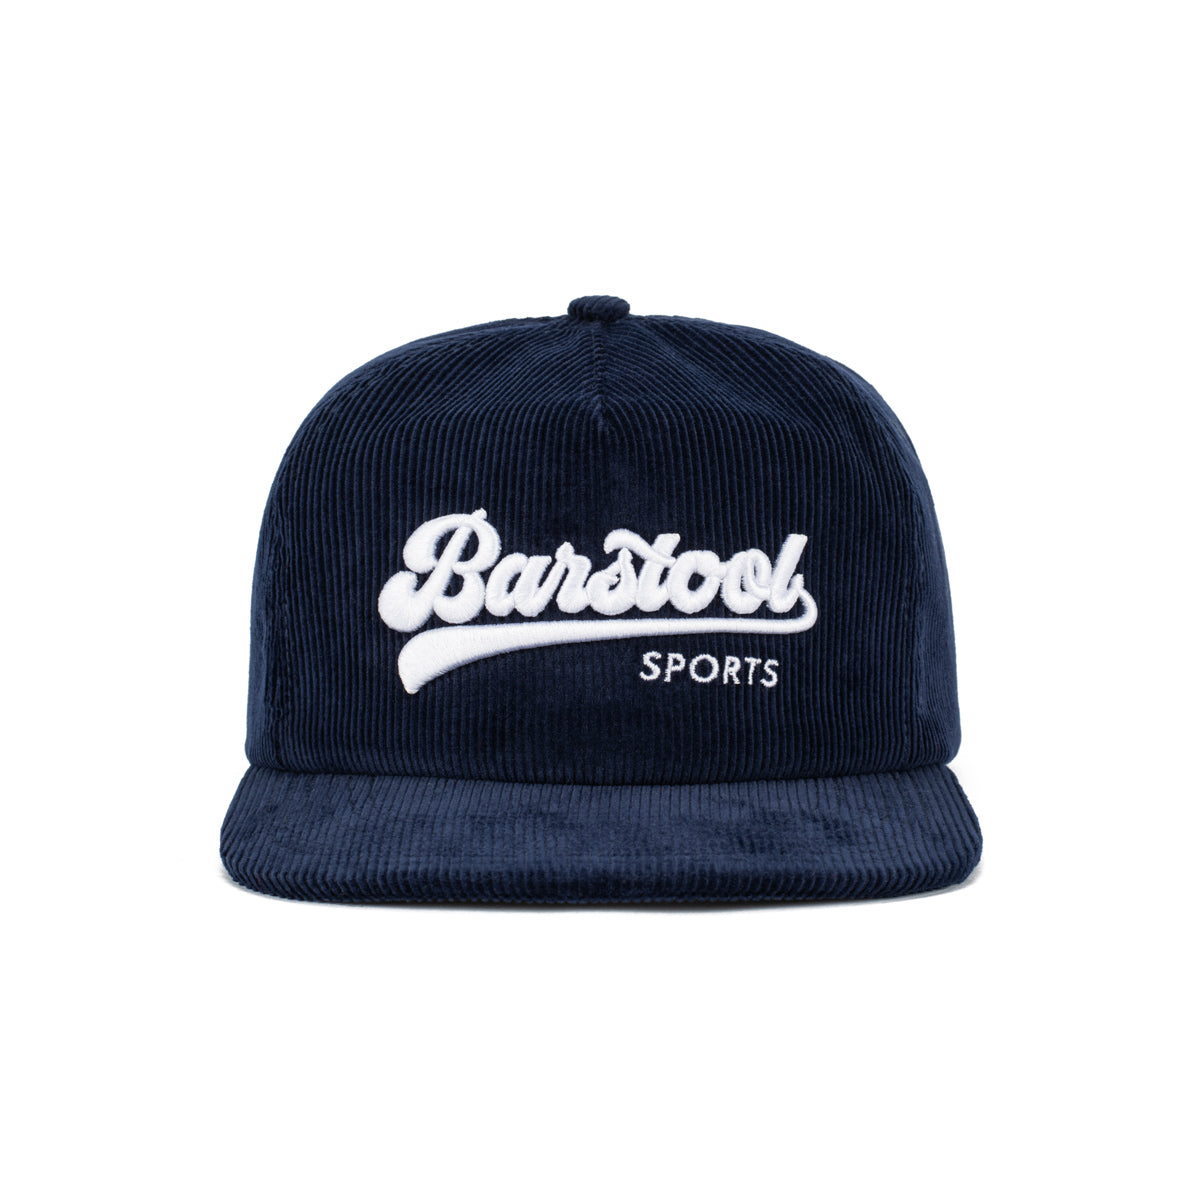 Barstool Sports Corduroy Hat-Hats-Barstool Sports-Navy-One Size-Barstool Sports